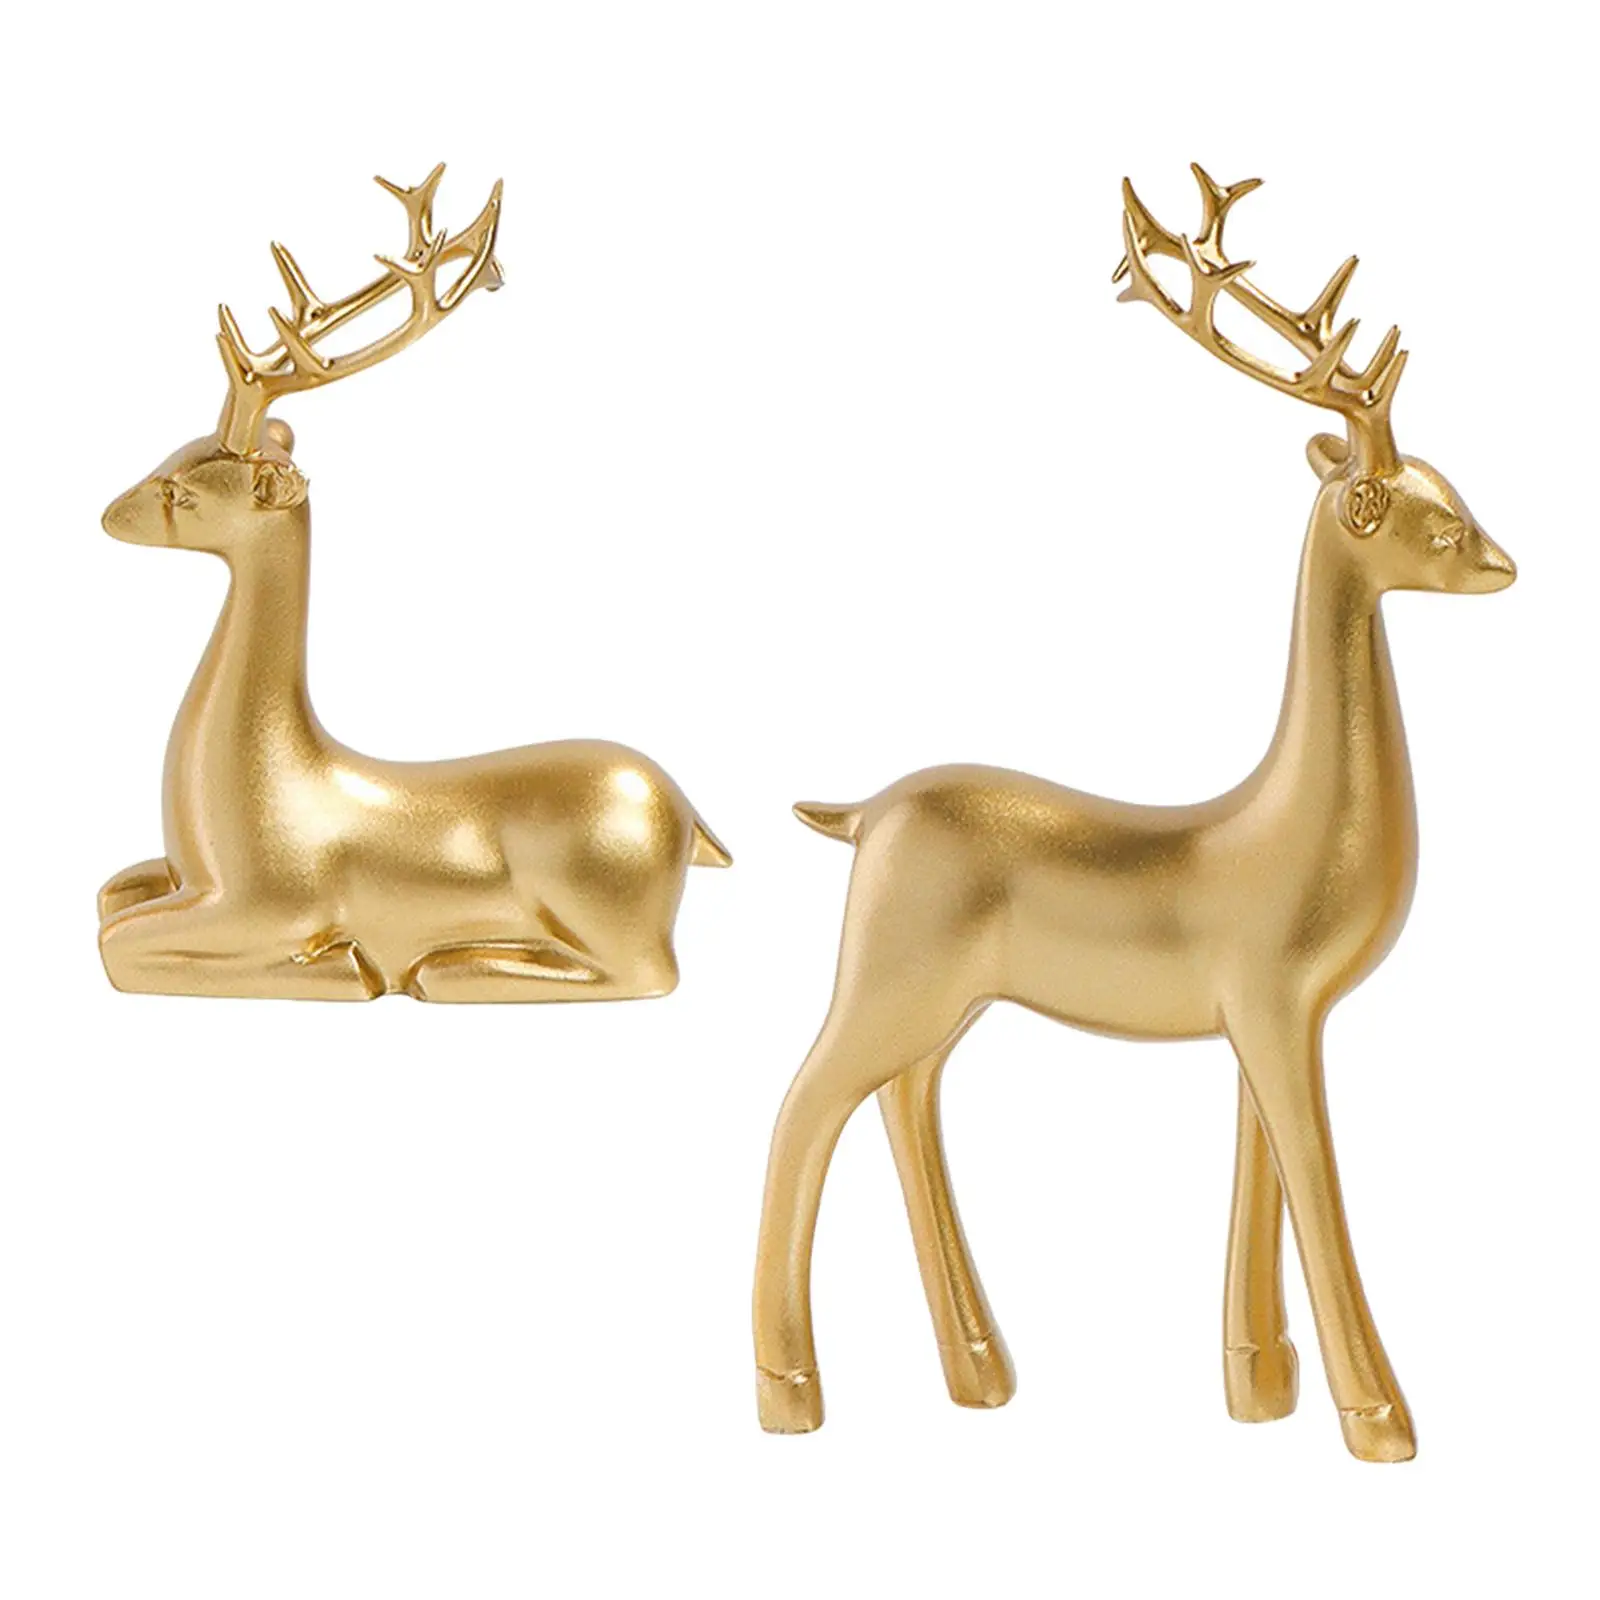 Resin Deer Sculpture 2 Pieces Reindeer Figurines Decorative Art Collection Accessory for Home Cabinet Desktop Tabletop Ornament